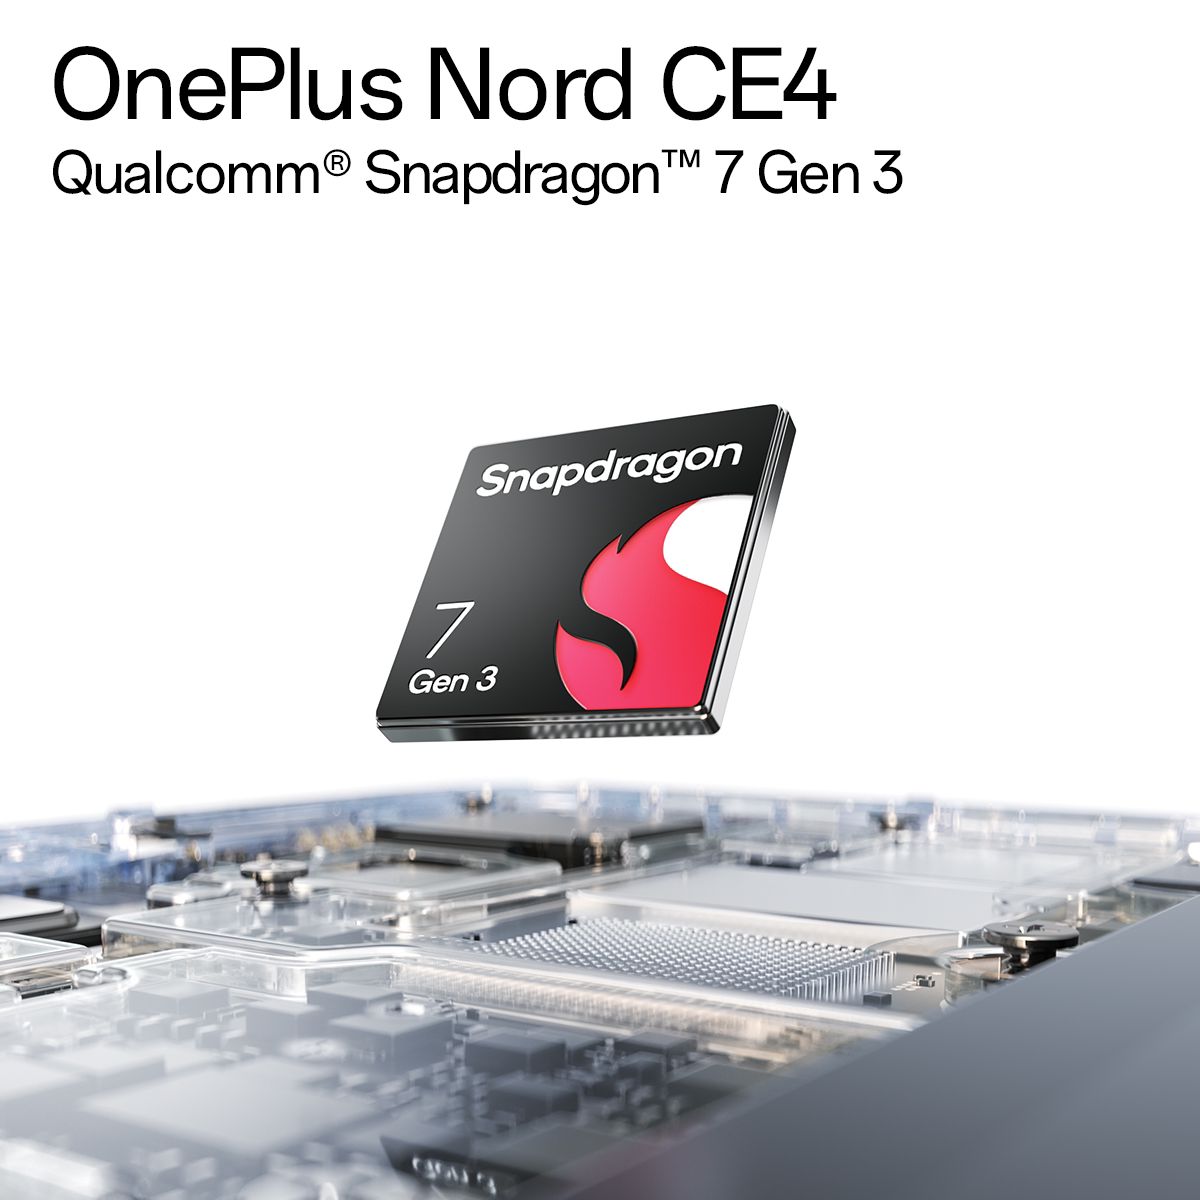 Boasts Snapdragon 7 Gen 3 chipset